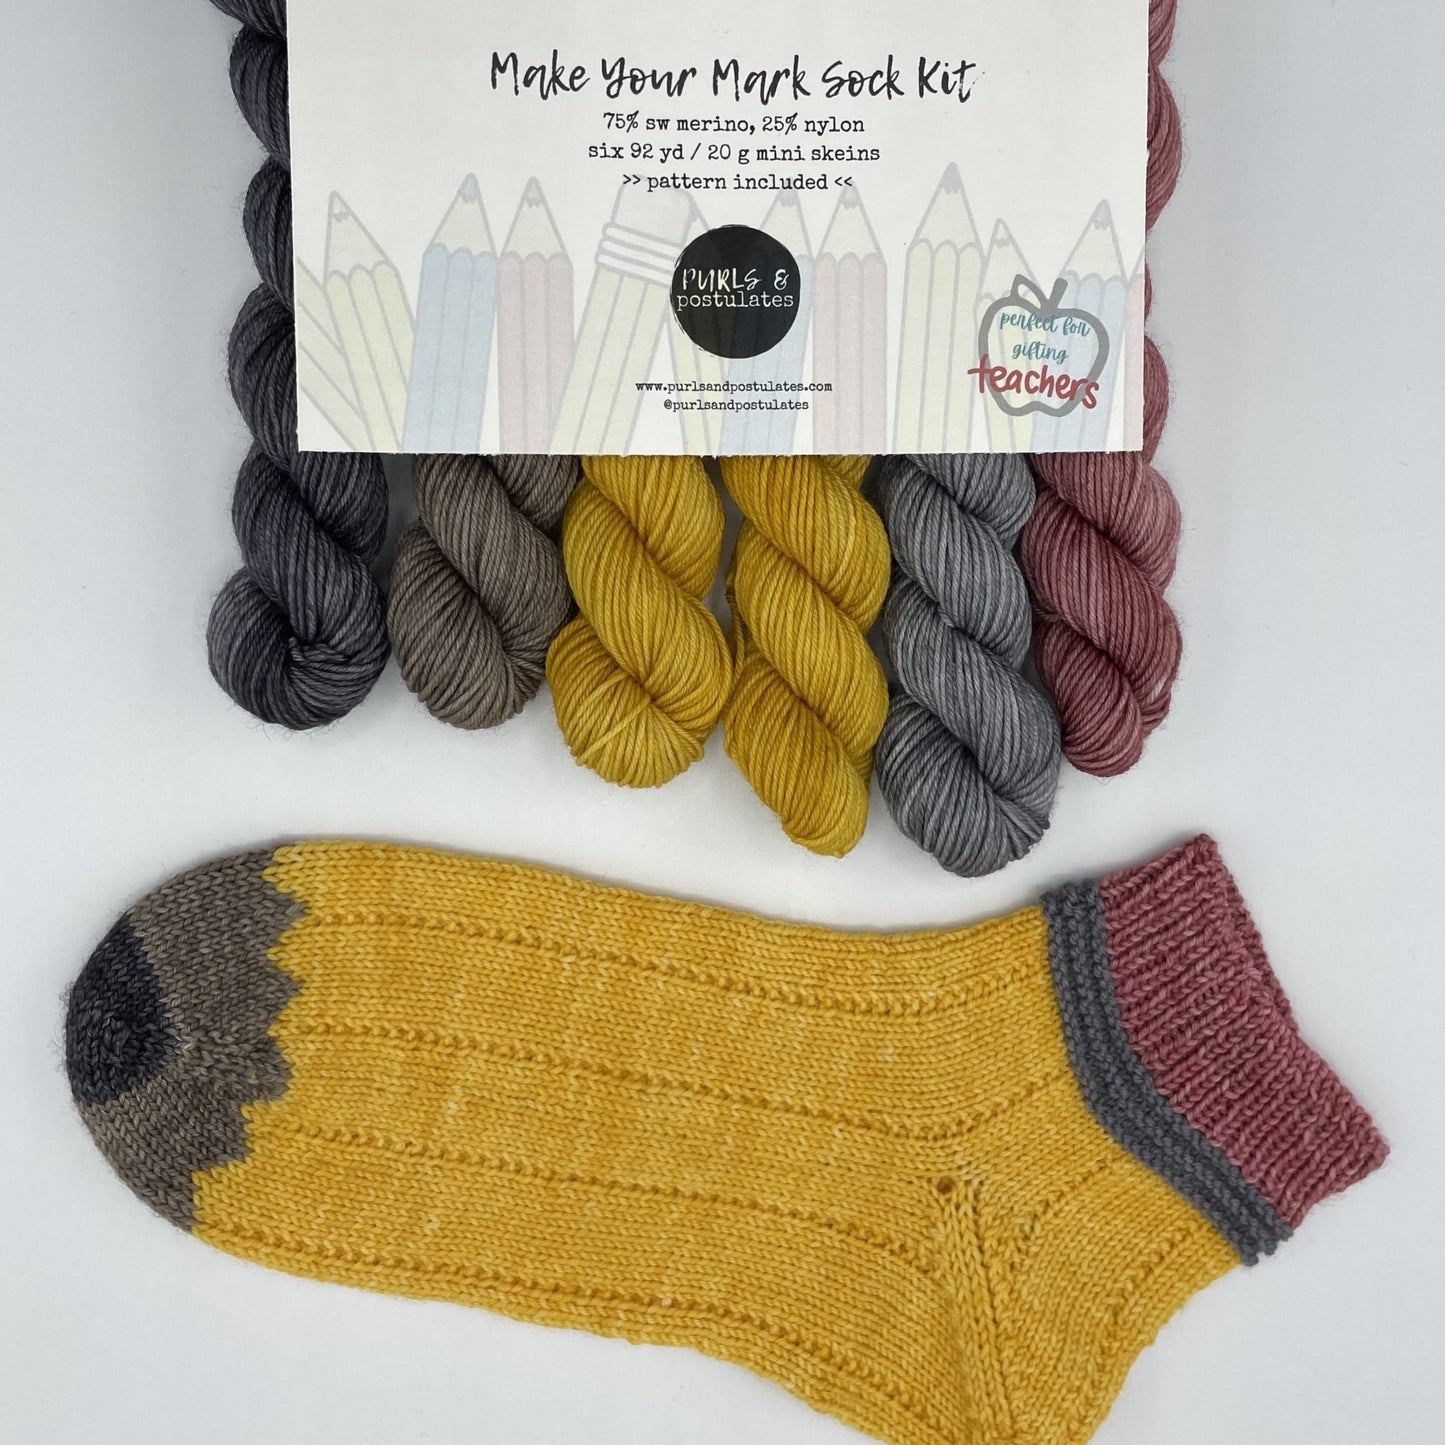 Make Your Mark Sock Kits